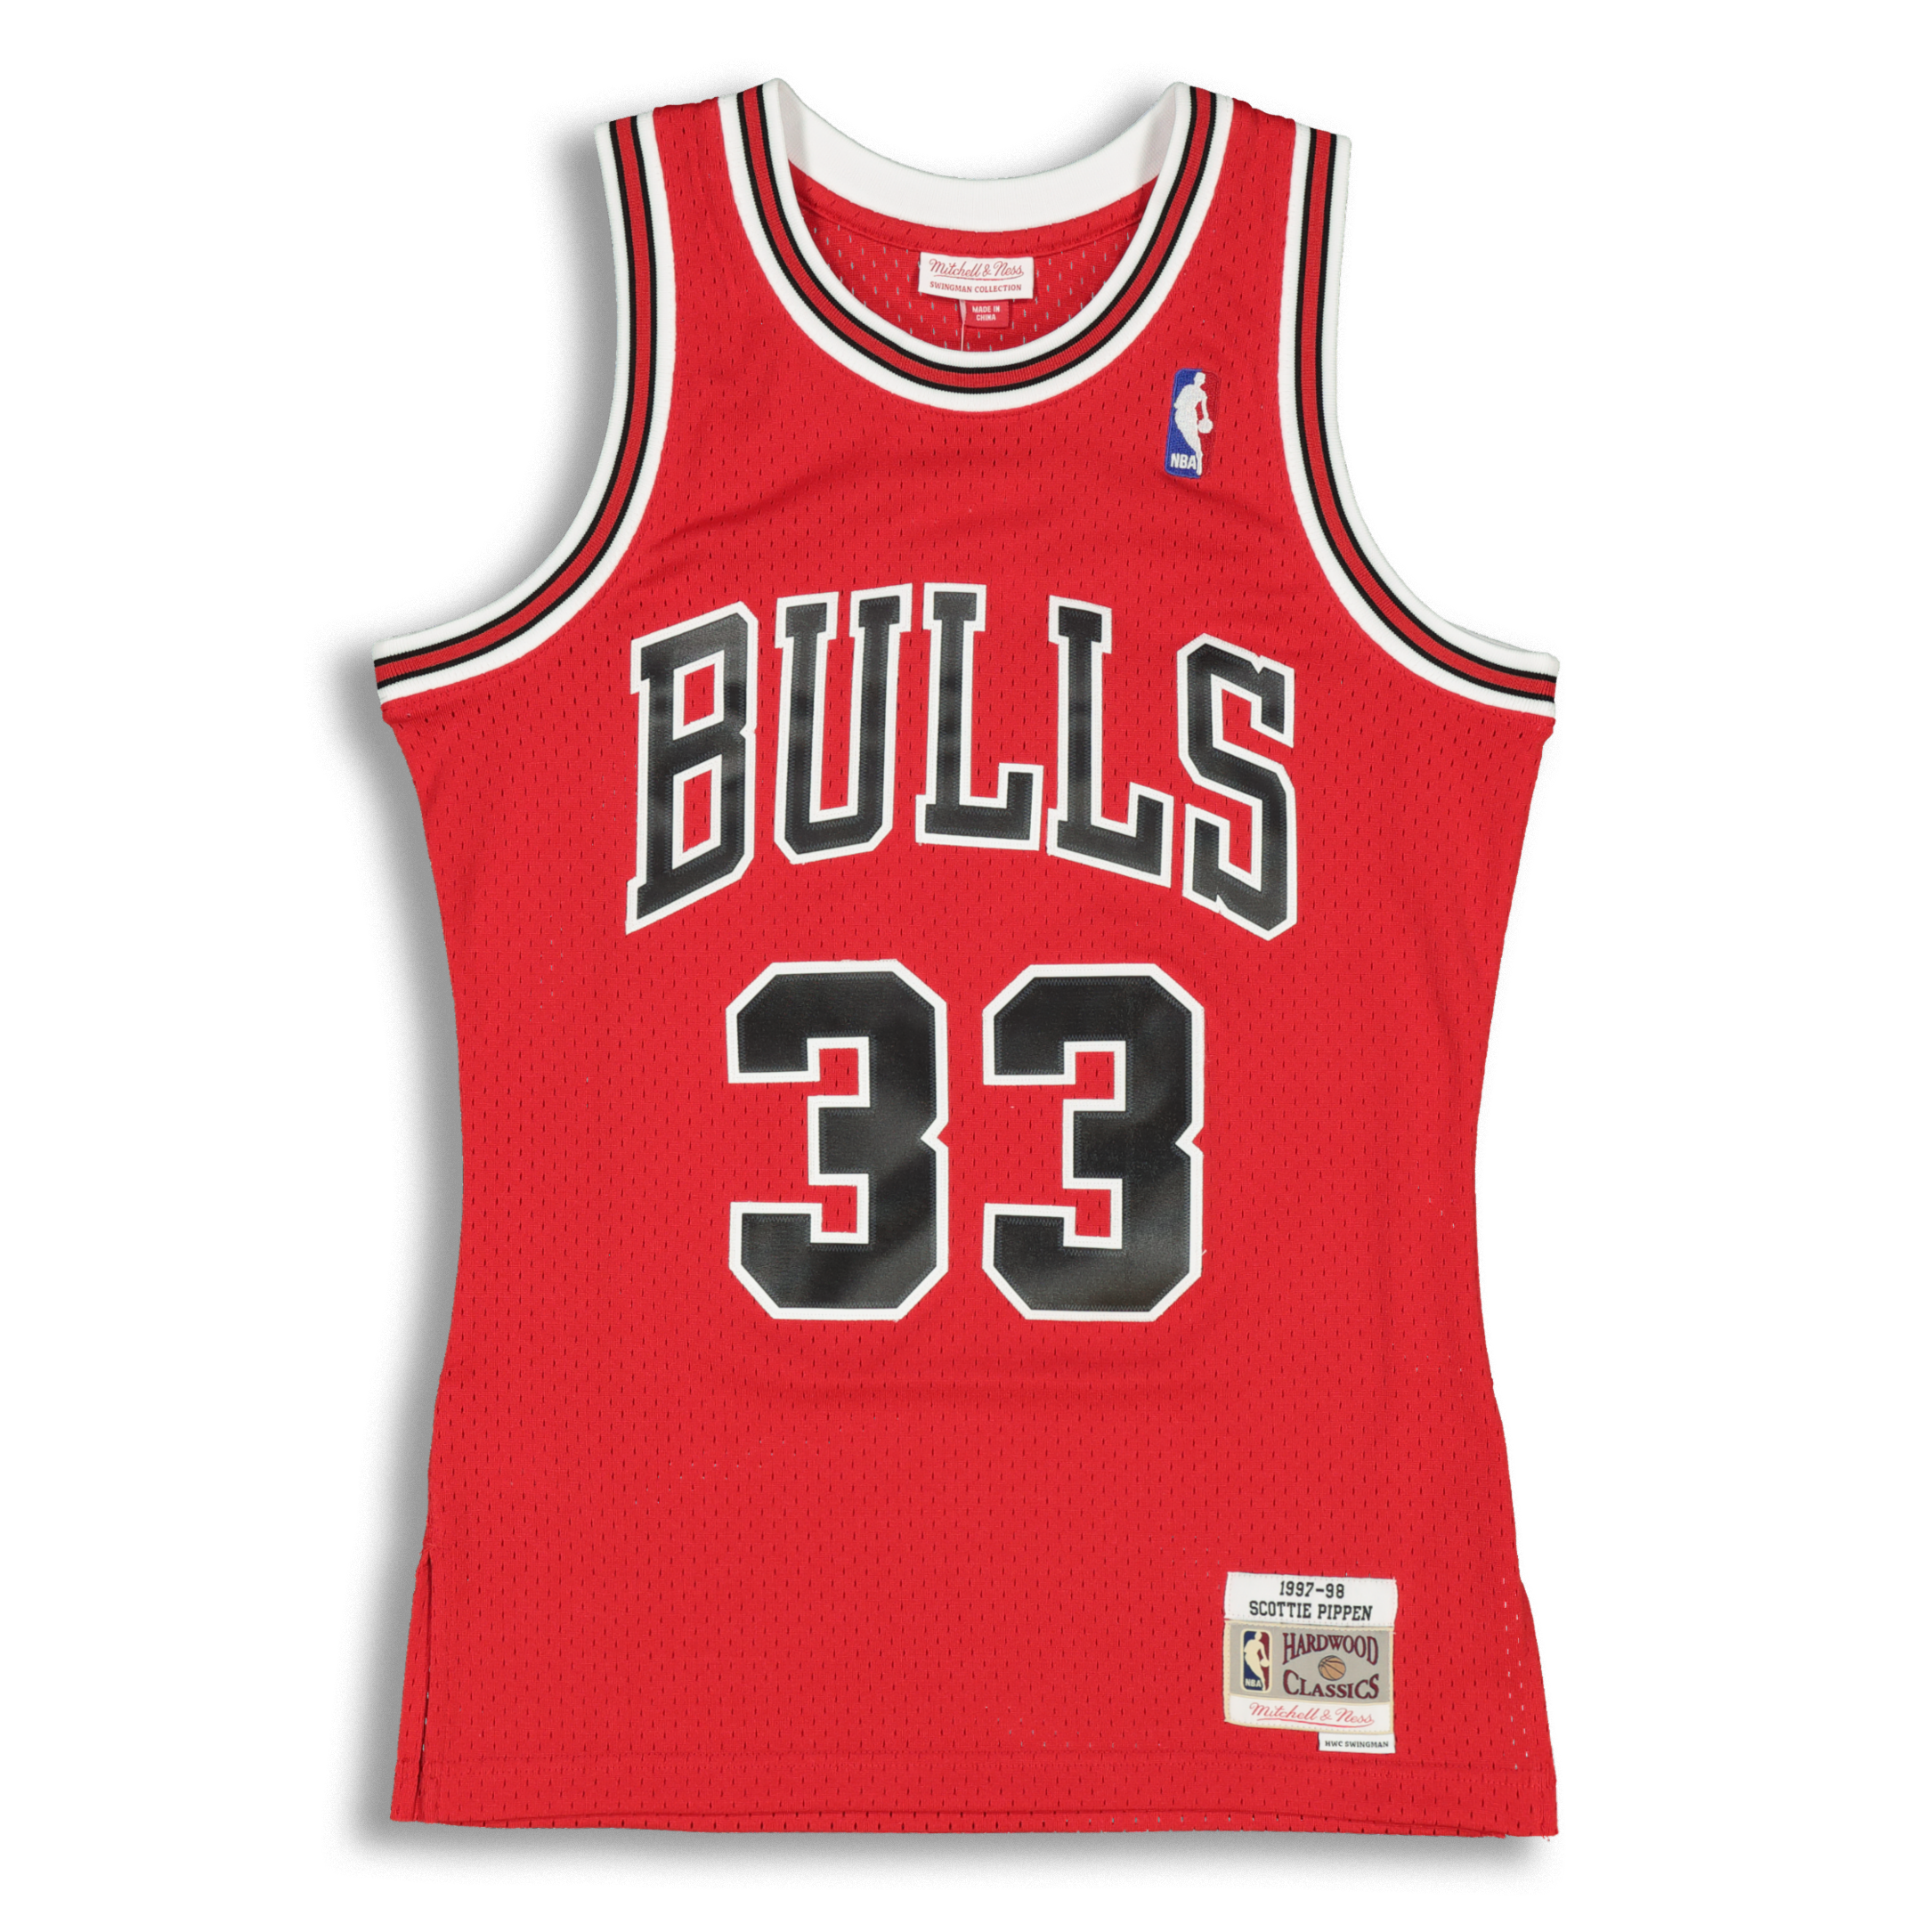 33 bulls jersey